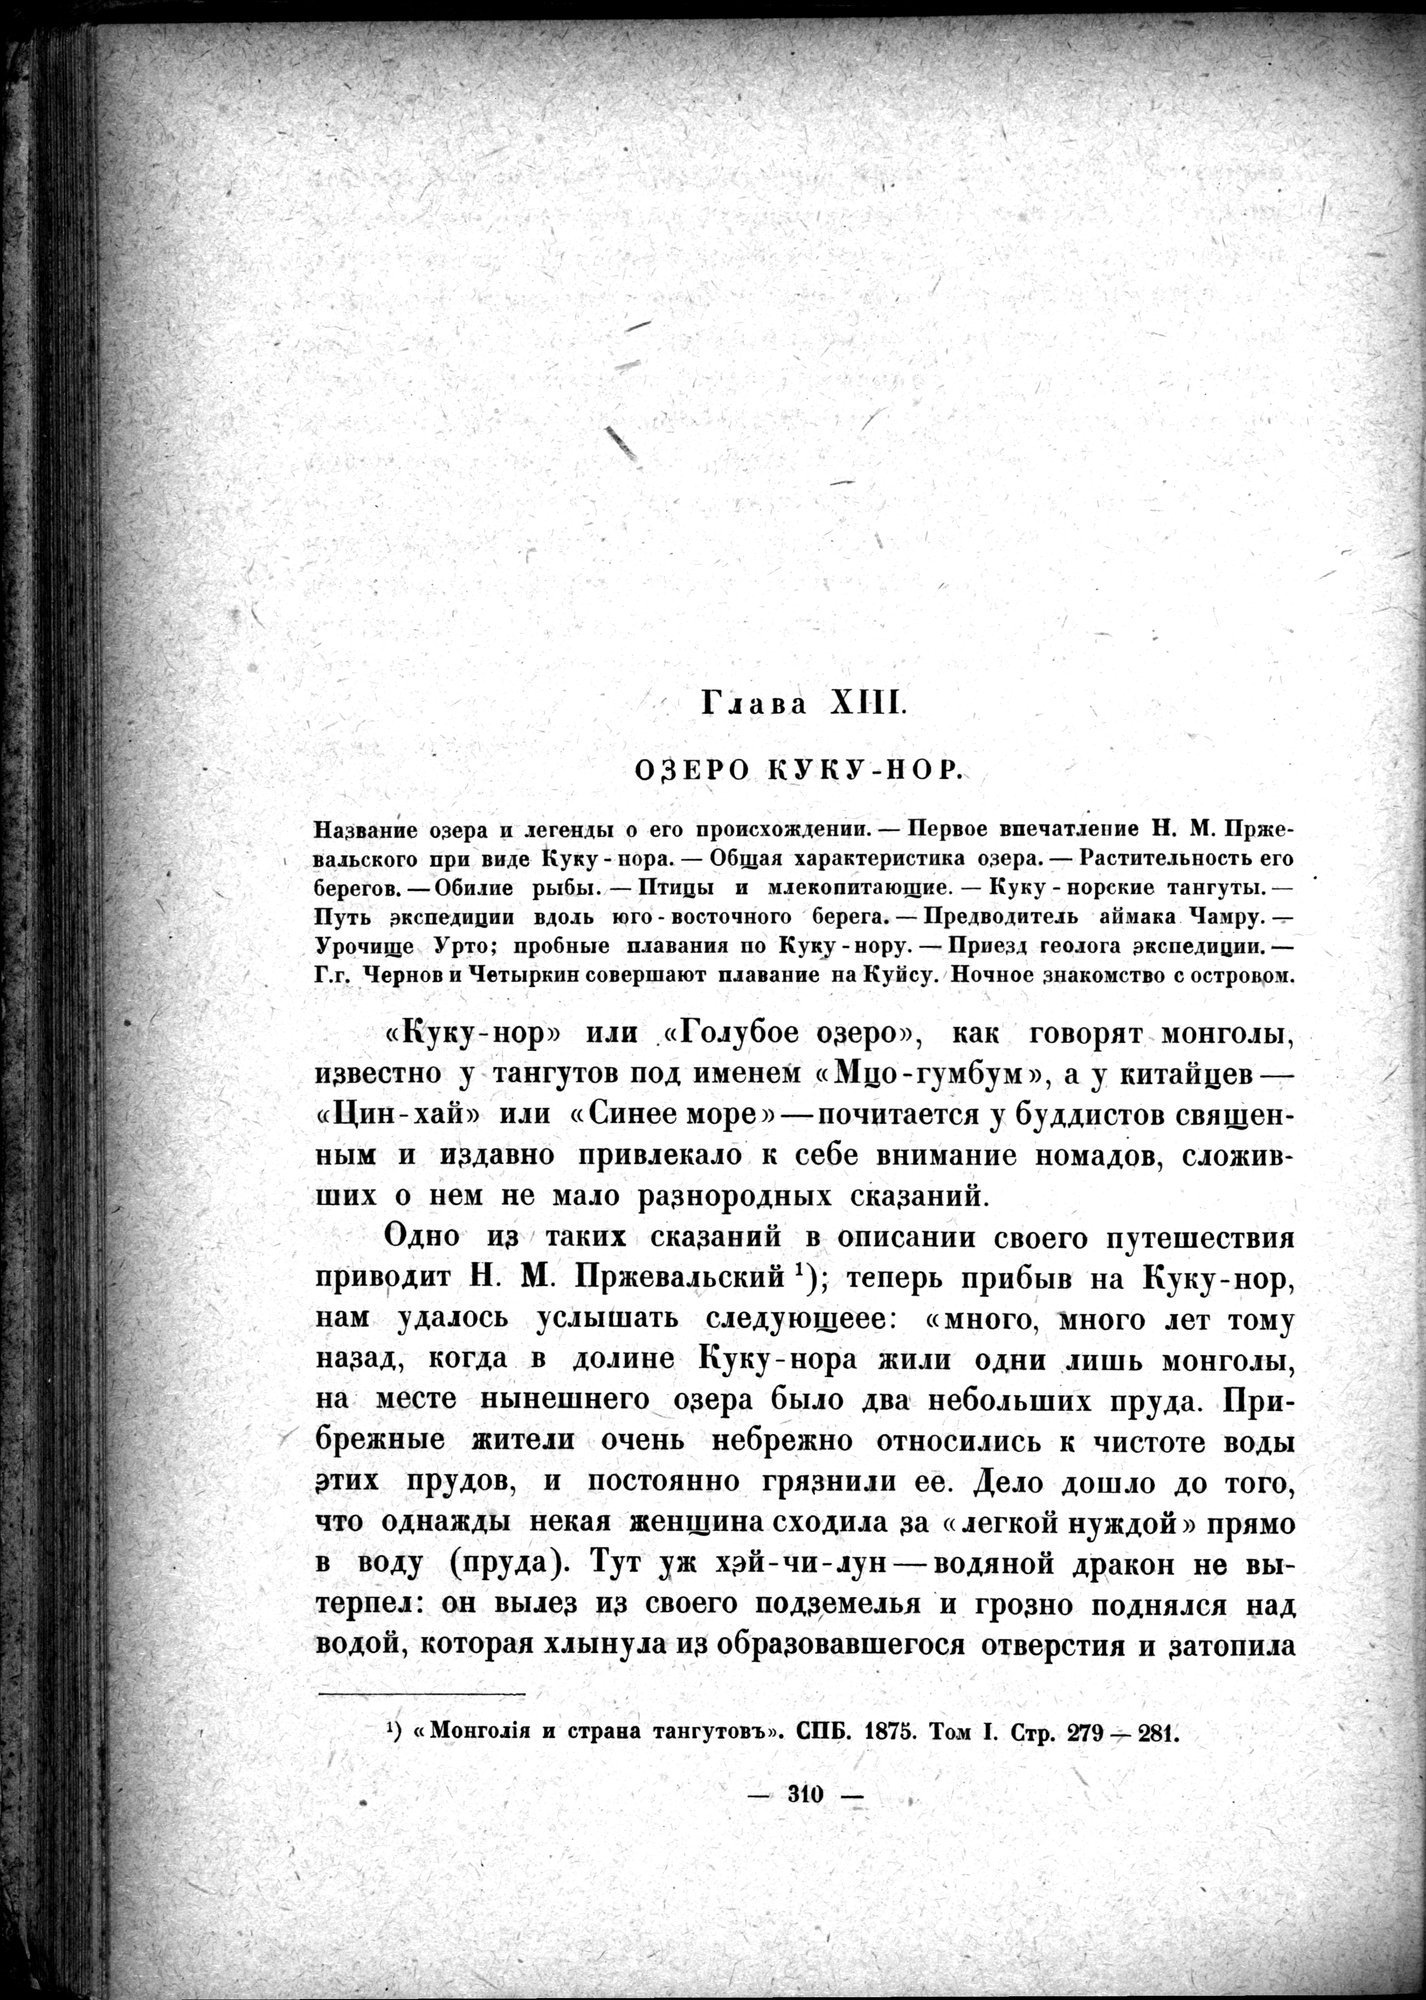 Mongoliya i Amdo i mertby gorod Khara-Khoto : vol.1 / Page 360 (Grayscale High Resolution Image)